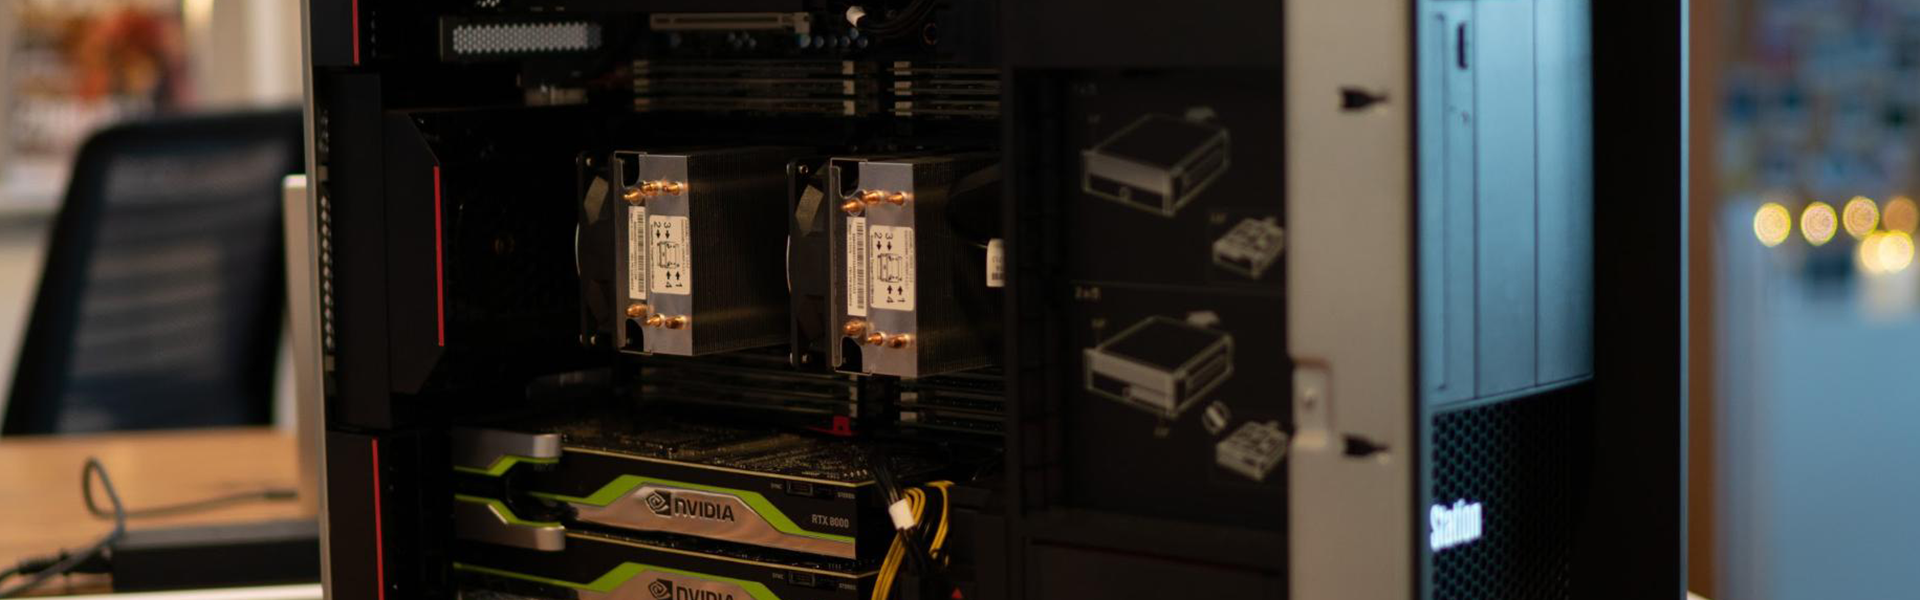 NVIDIA graphics cards inside a Lenovo Thinkstation computer